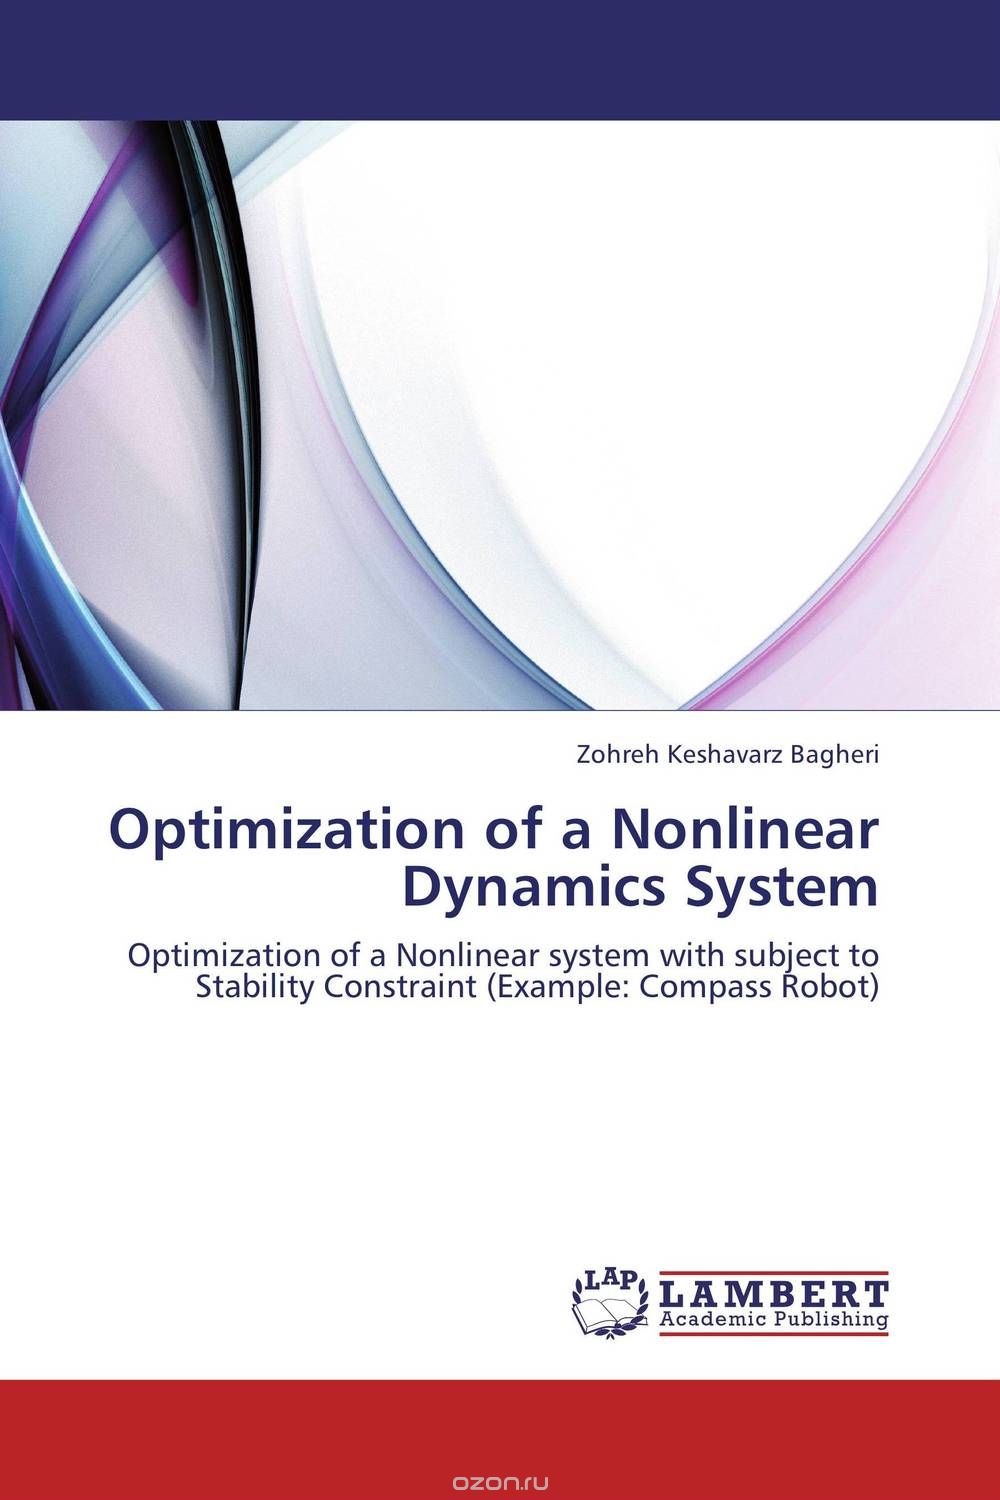 Скачать книгу "Optimization of a Nonlinear Dynamics System"